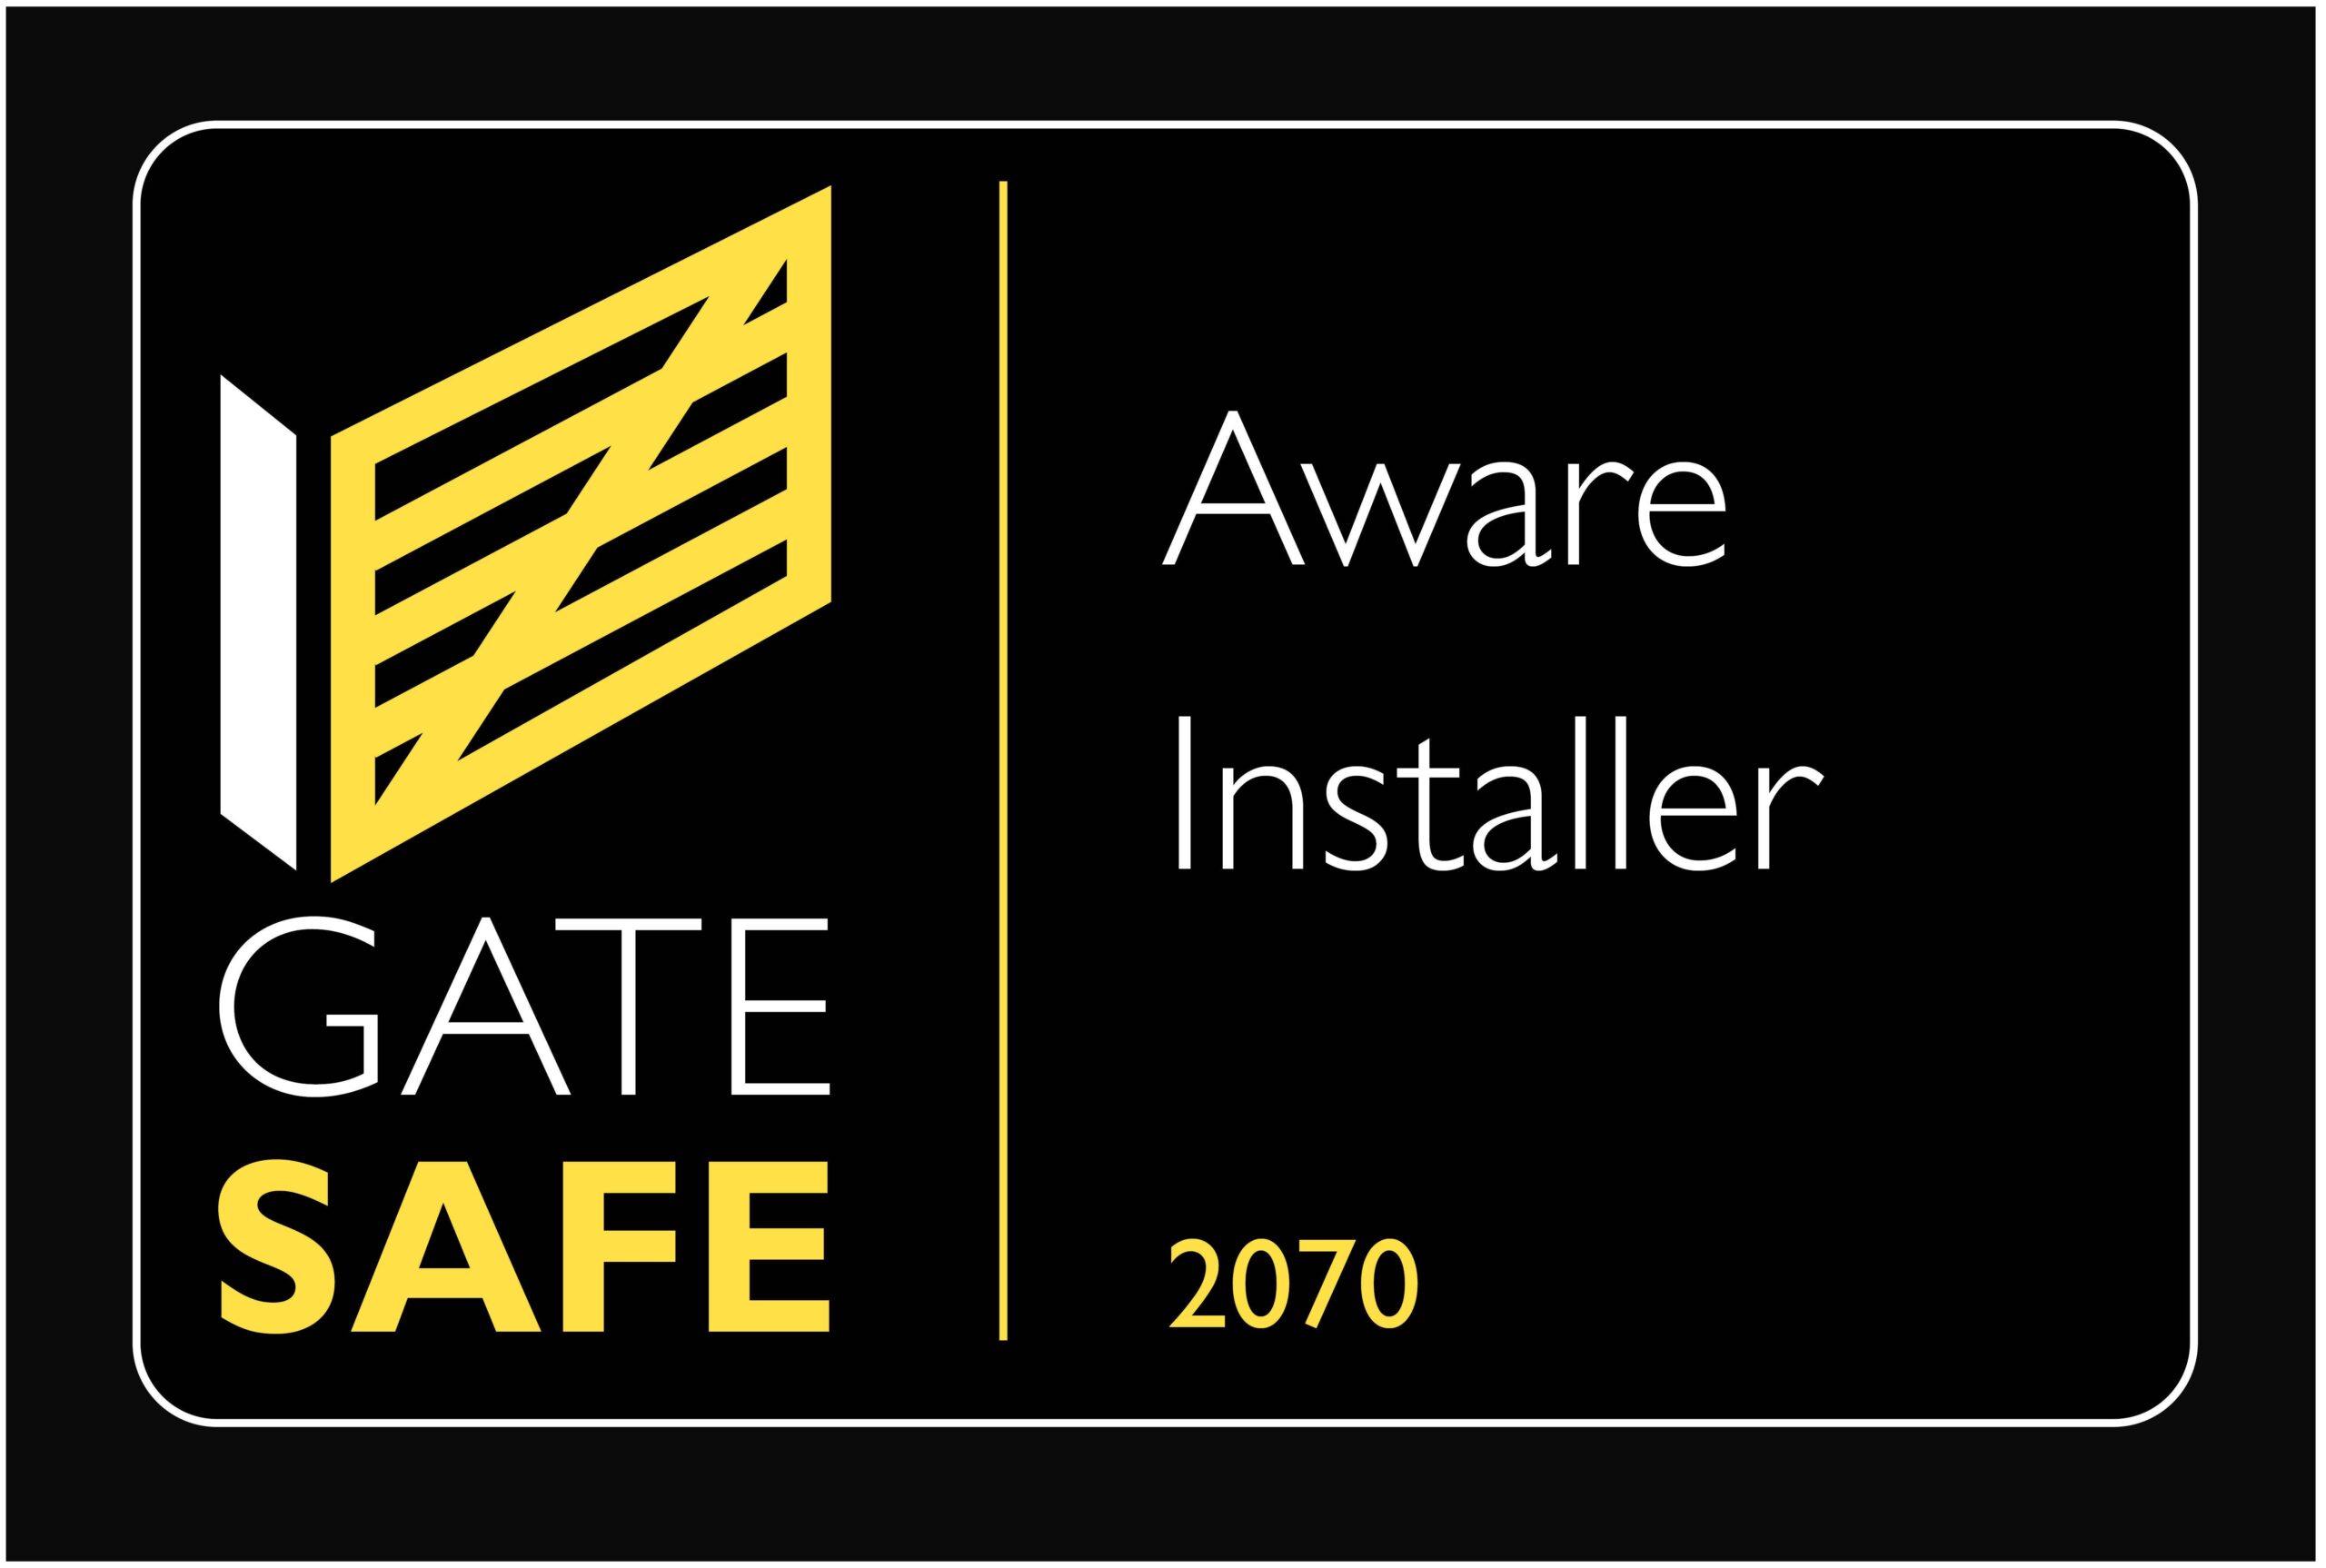 Gate Safe Aware Installer